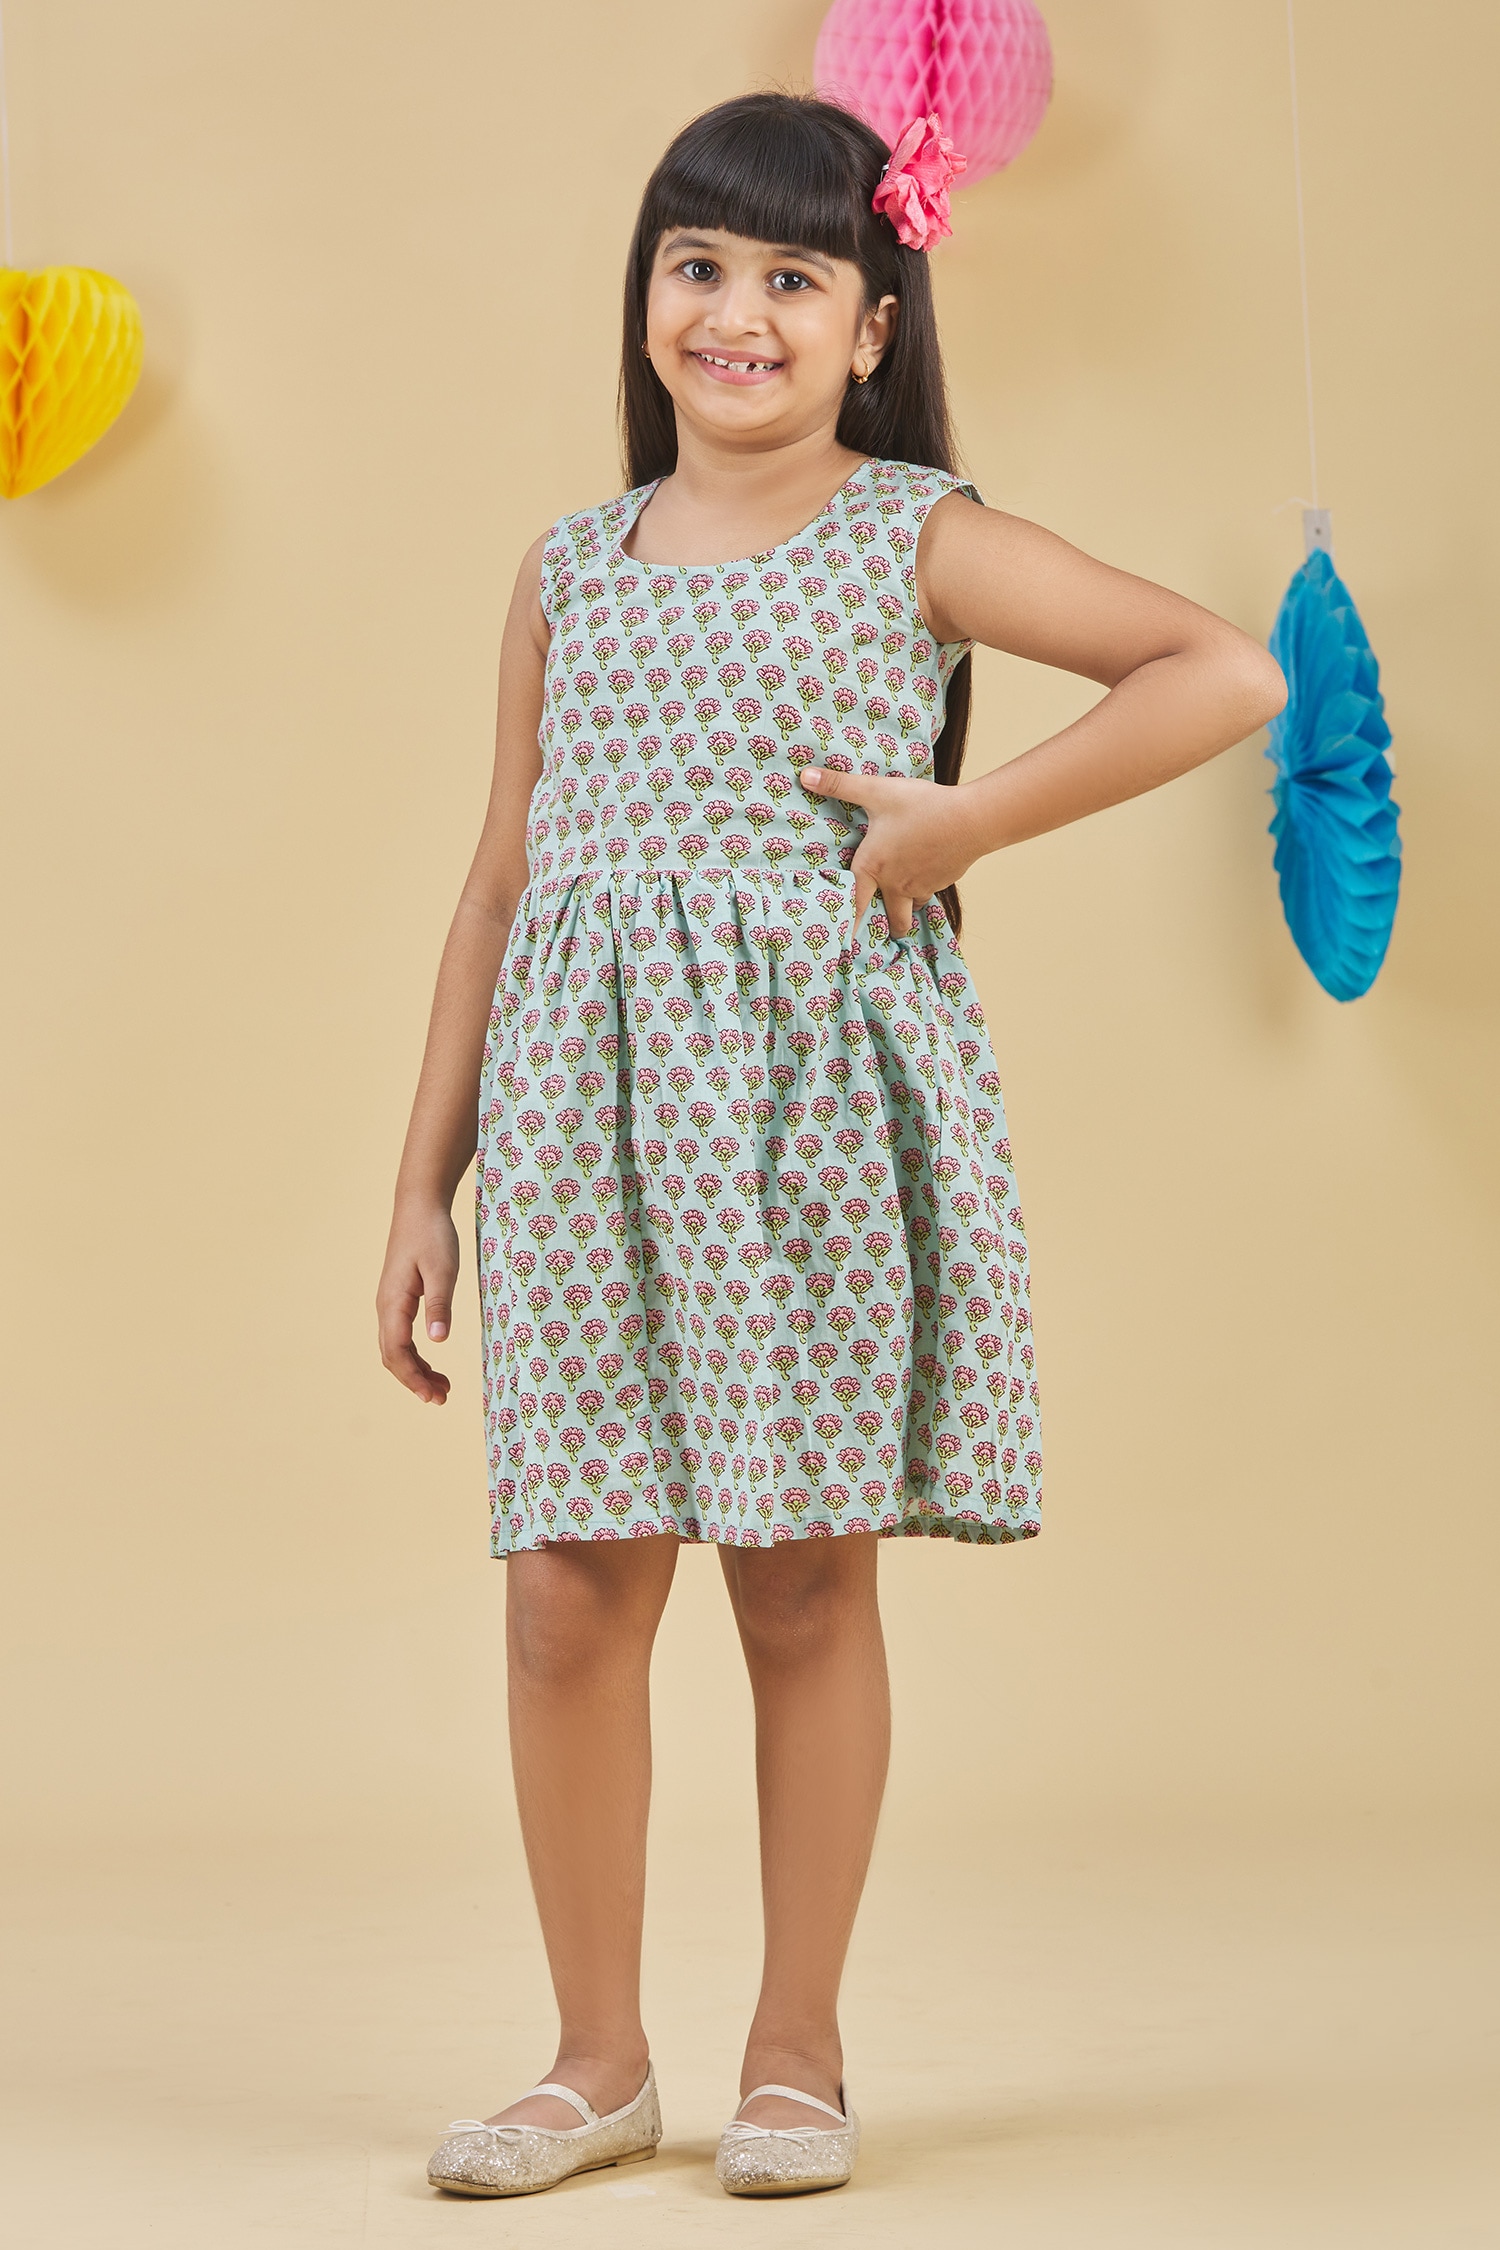 SBYOJLPB Children Dress Girl No Sleeve Princess Dress Snowflake Pattern  Printed Net Yarn Long Dress Canonicals Reduced Price White 9-10 Years -  Walmart.com